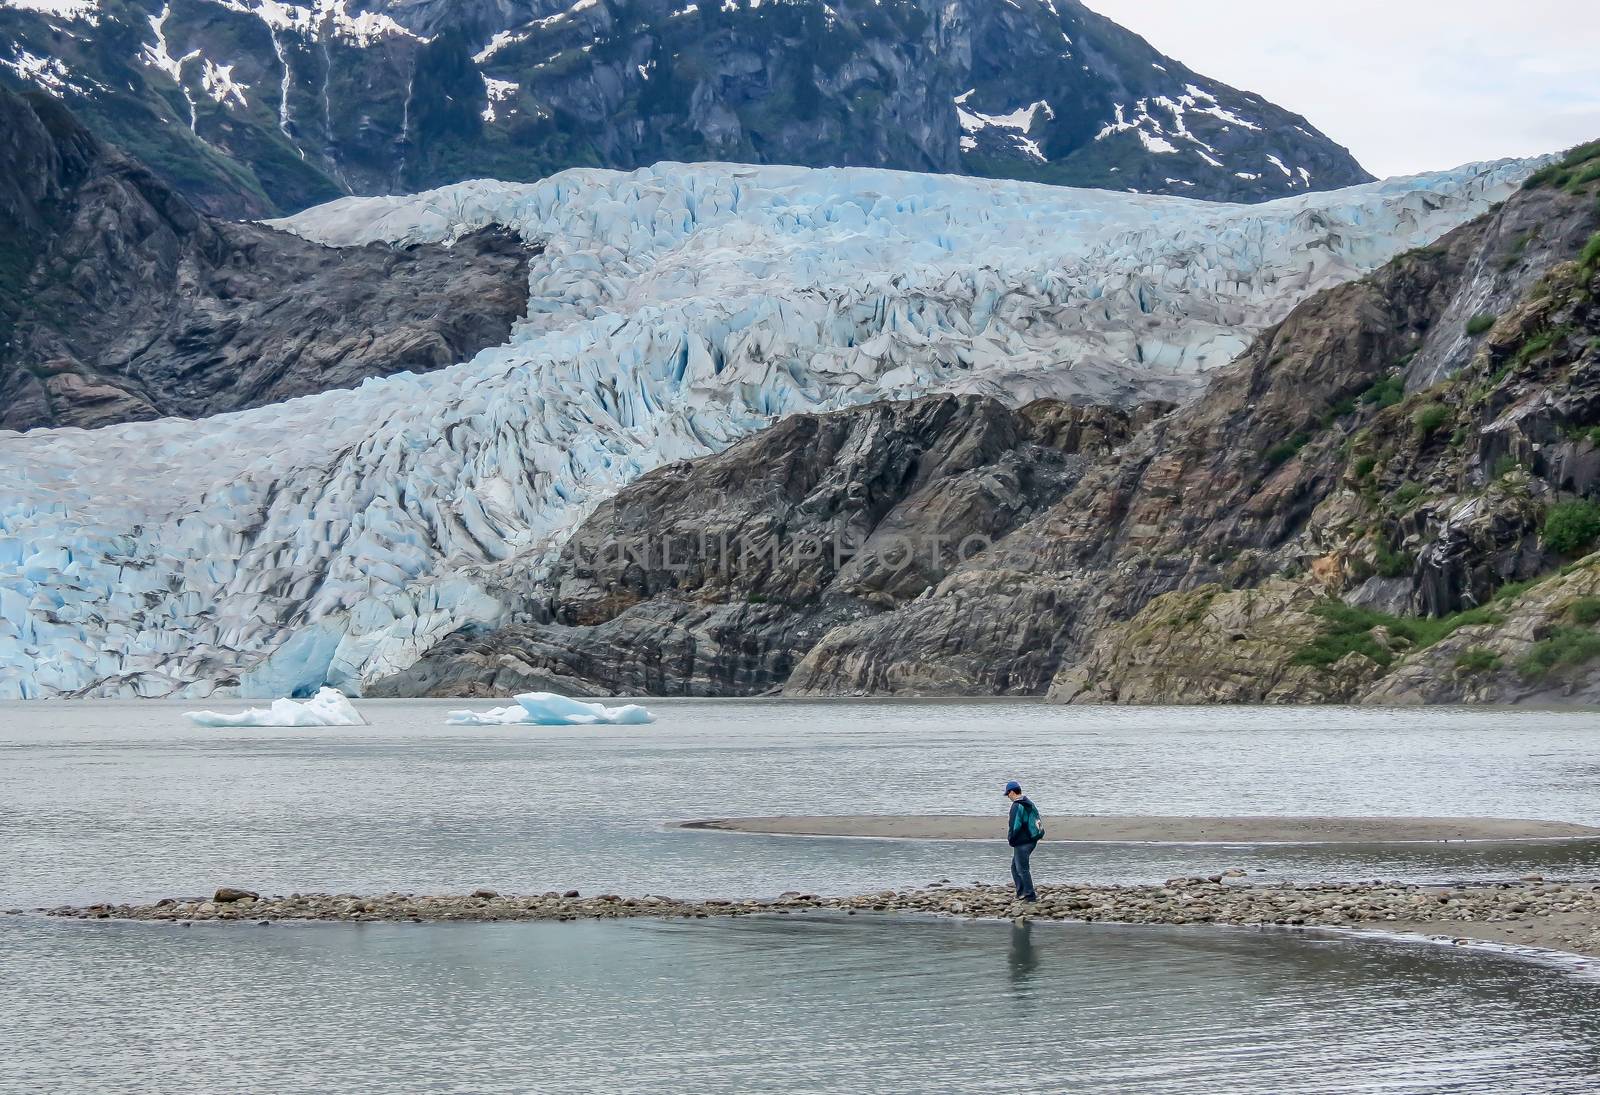 A tourist exploring the shoreline at the lake near Mendenhall Glacier at Juneau, Alaska.
Photo taken on: June 17th, 2012